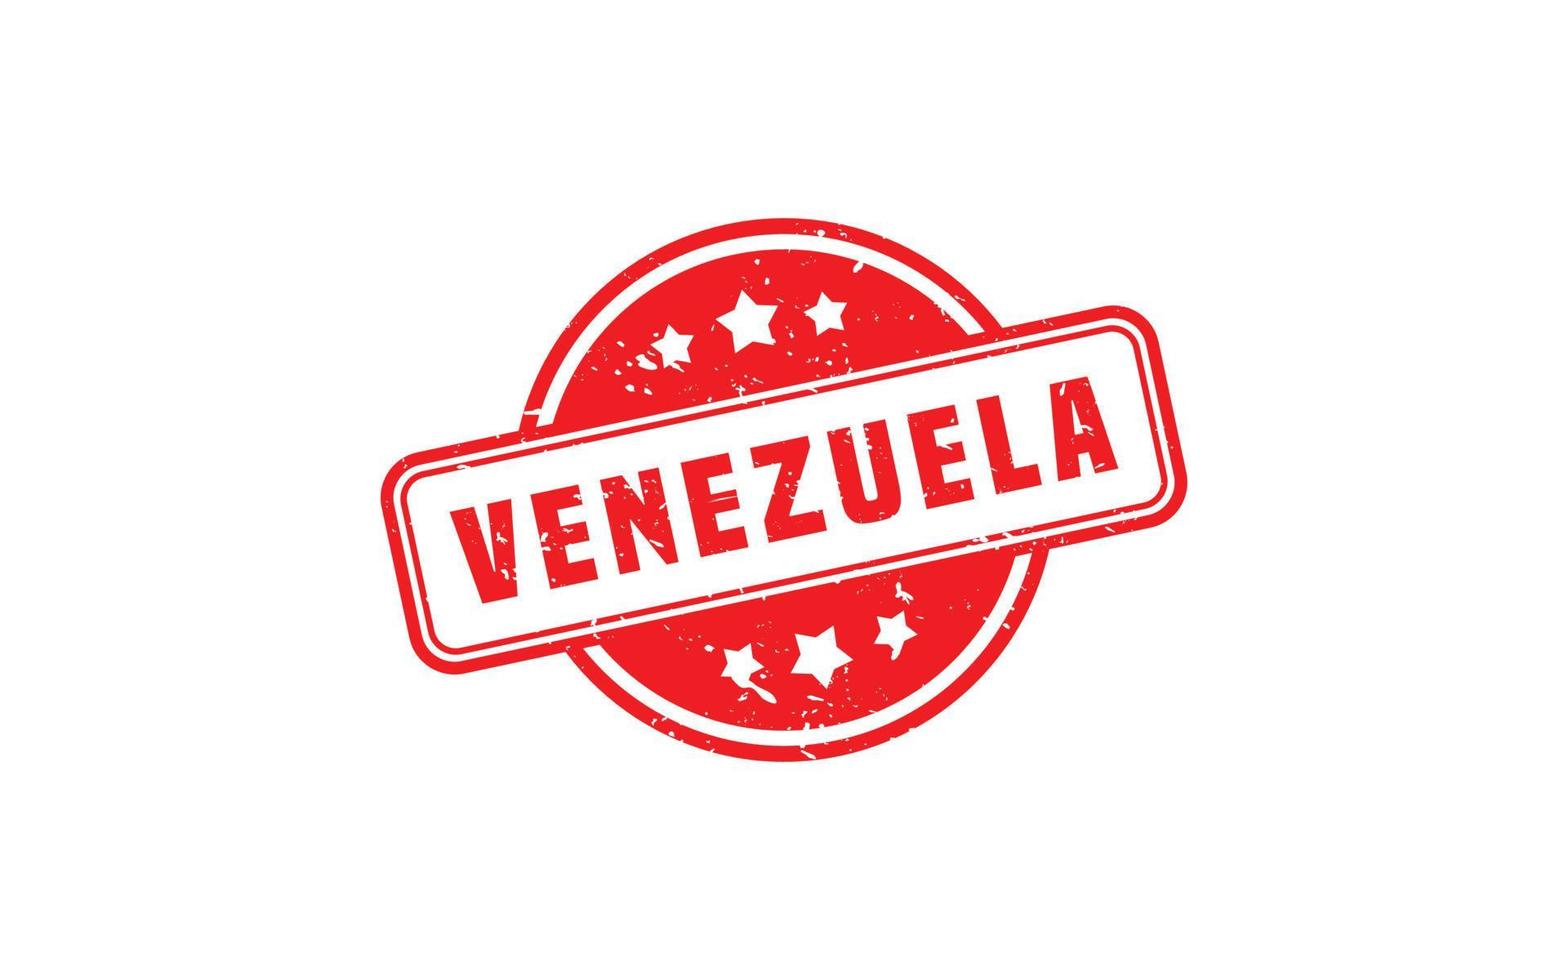 Venezuela sello caucho con grunge estilo en blanco antecedentes vector